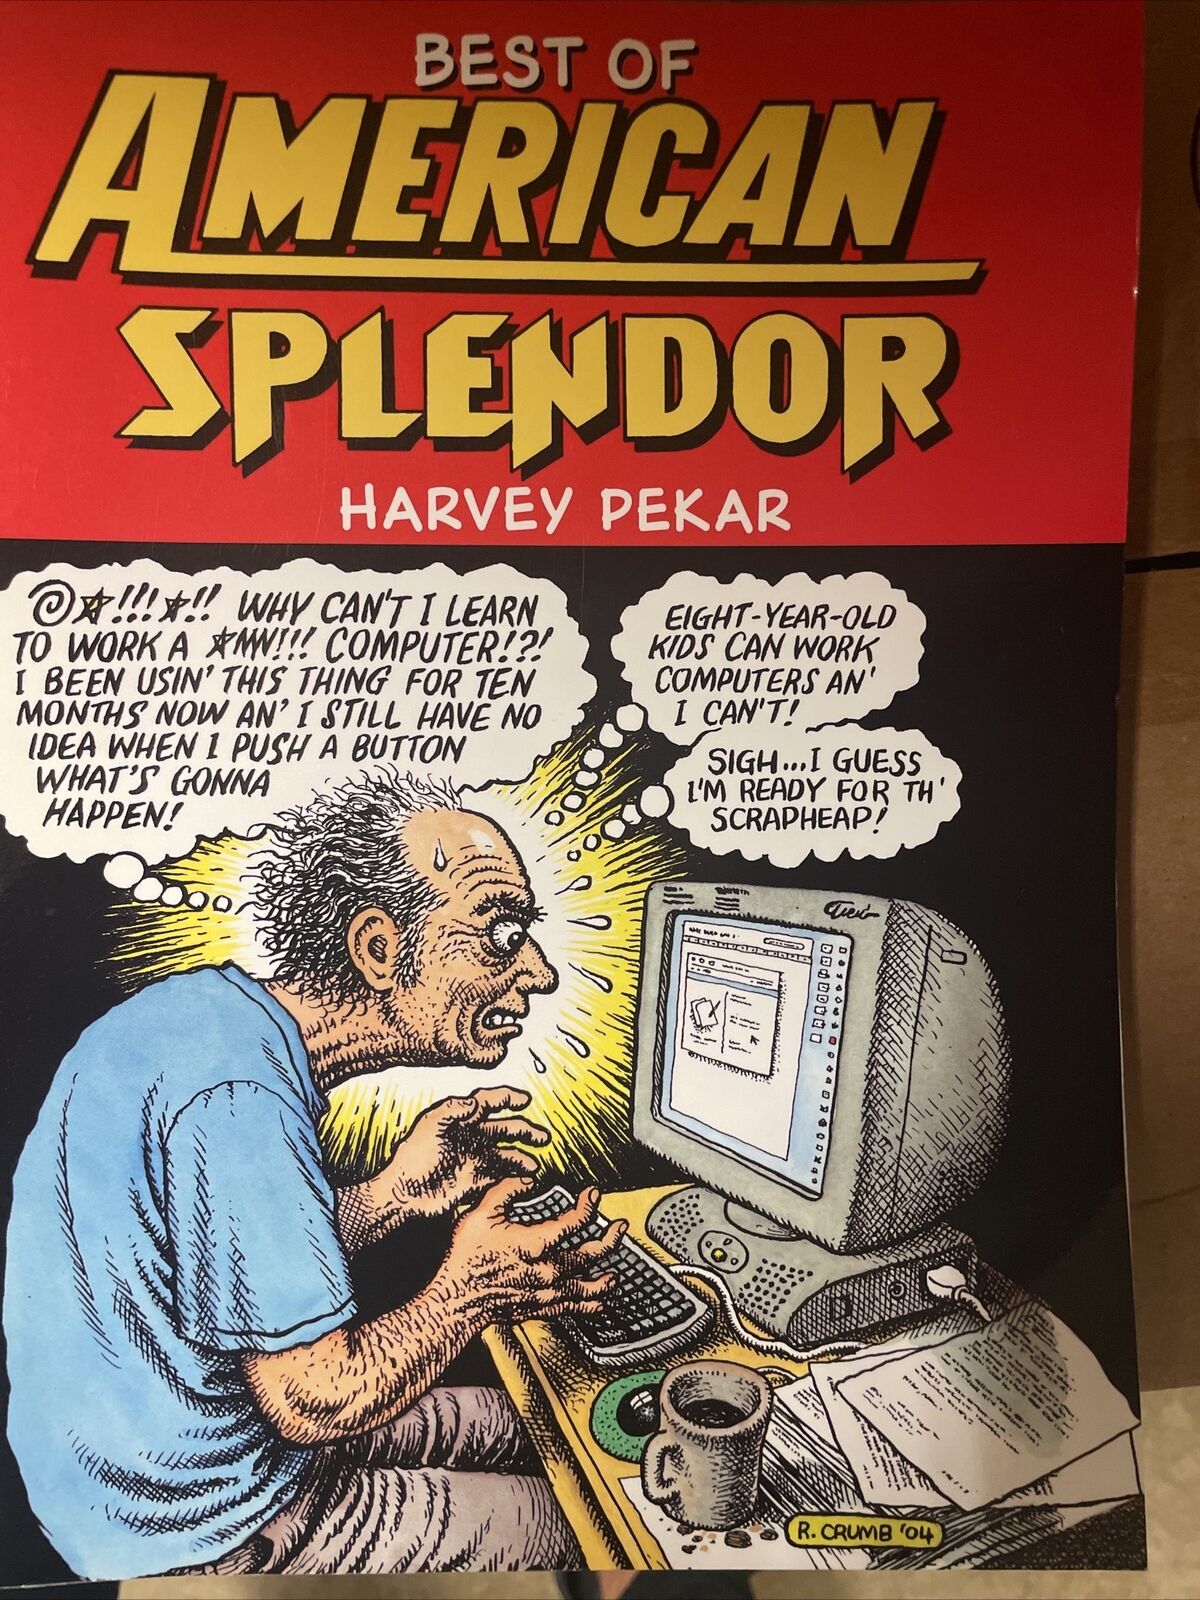 Best of American Splendor by Harvey Pekar (2005, Trade Paperback)